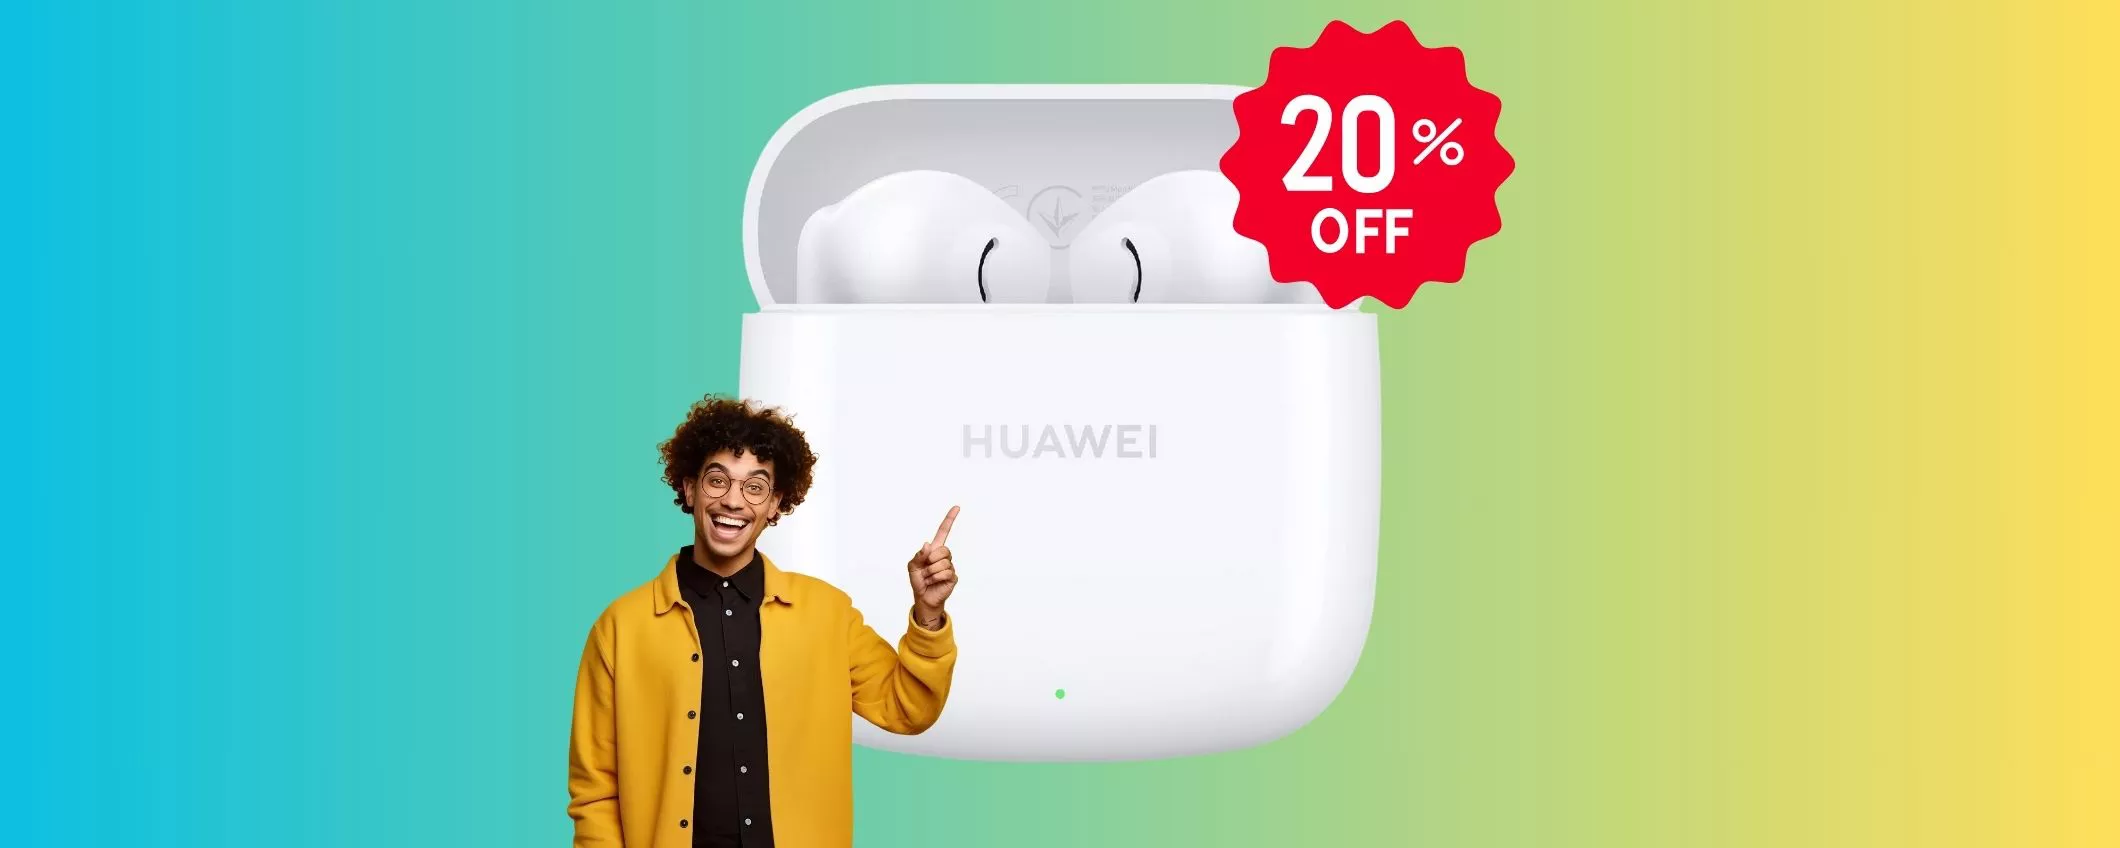 Huawei FreeBuds SE 2: prezzo SHOCK per tanta qualità!